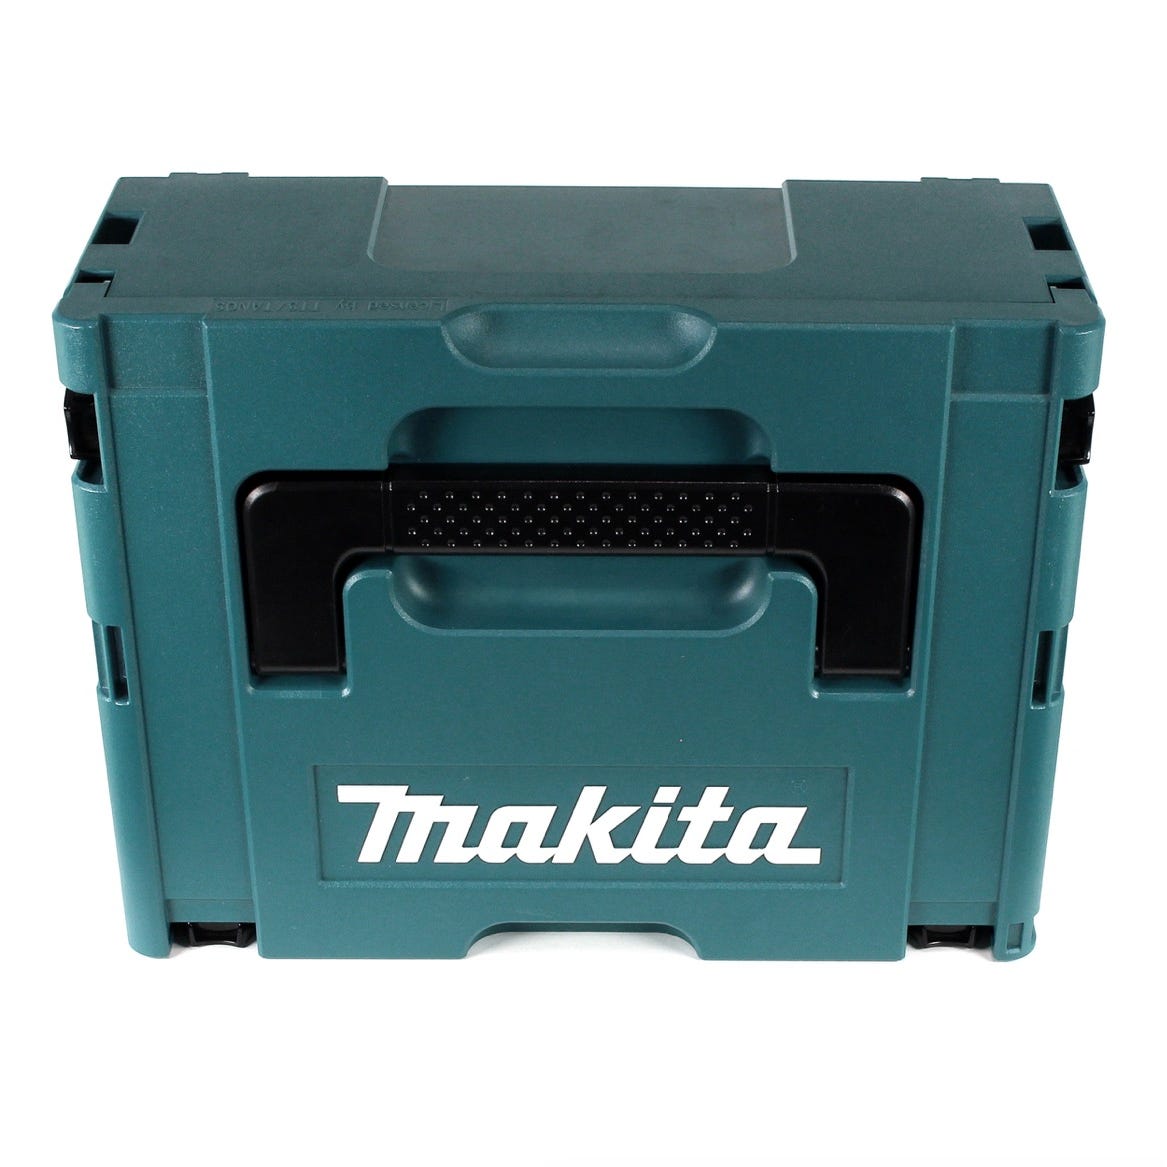 Makita DDF 485 M1J 18 V Li-Ion Perceuse visseuse sans fil Brushless 13 mm + Coffret MakPac + 1 x Batterie 4,0 Ah - sans 2